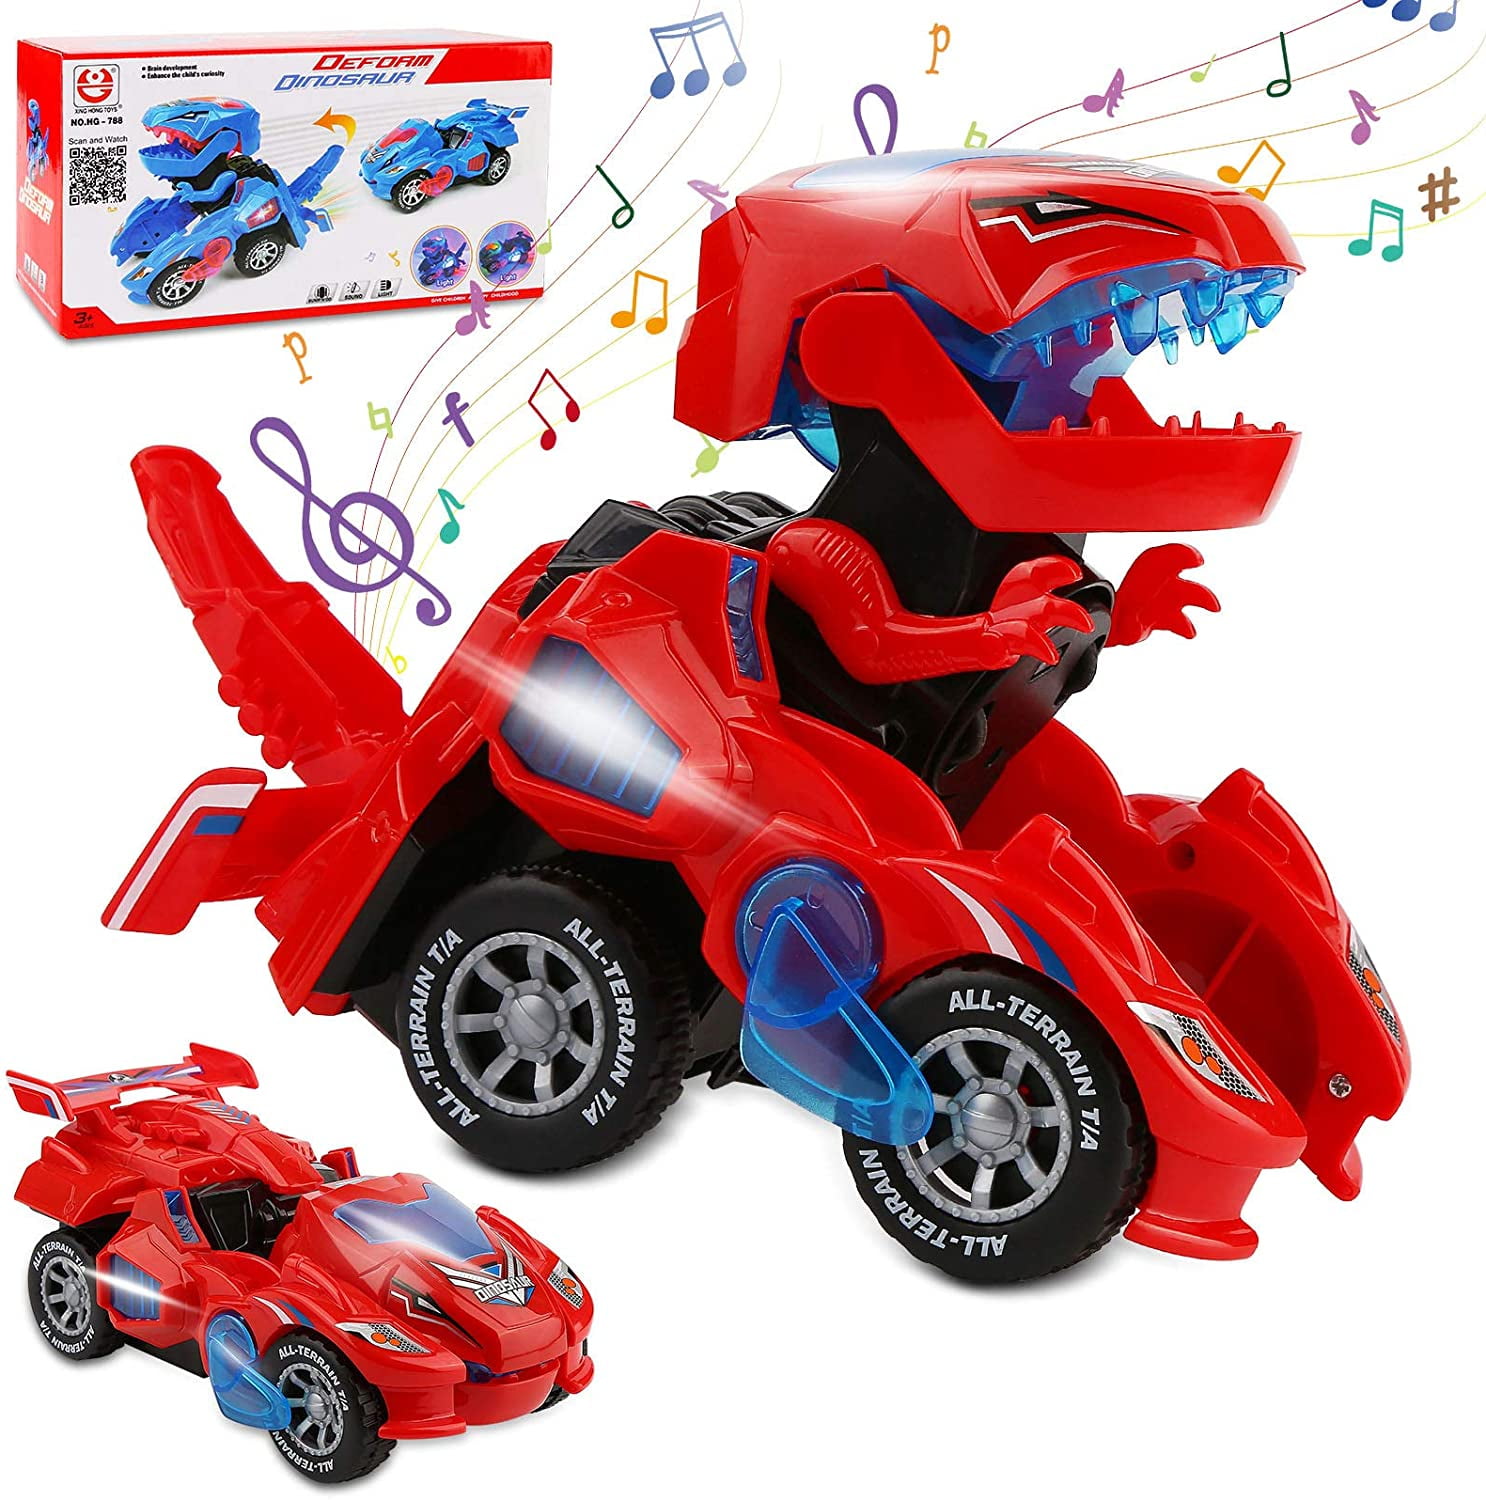 Transformer LED Music Car Dinosaur deformation Car Electric Toy Children's Gifts